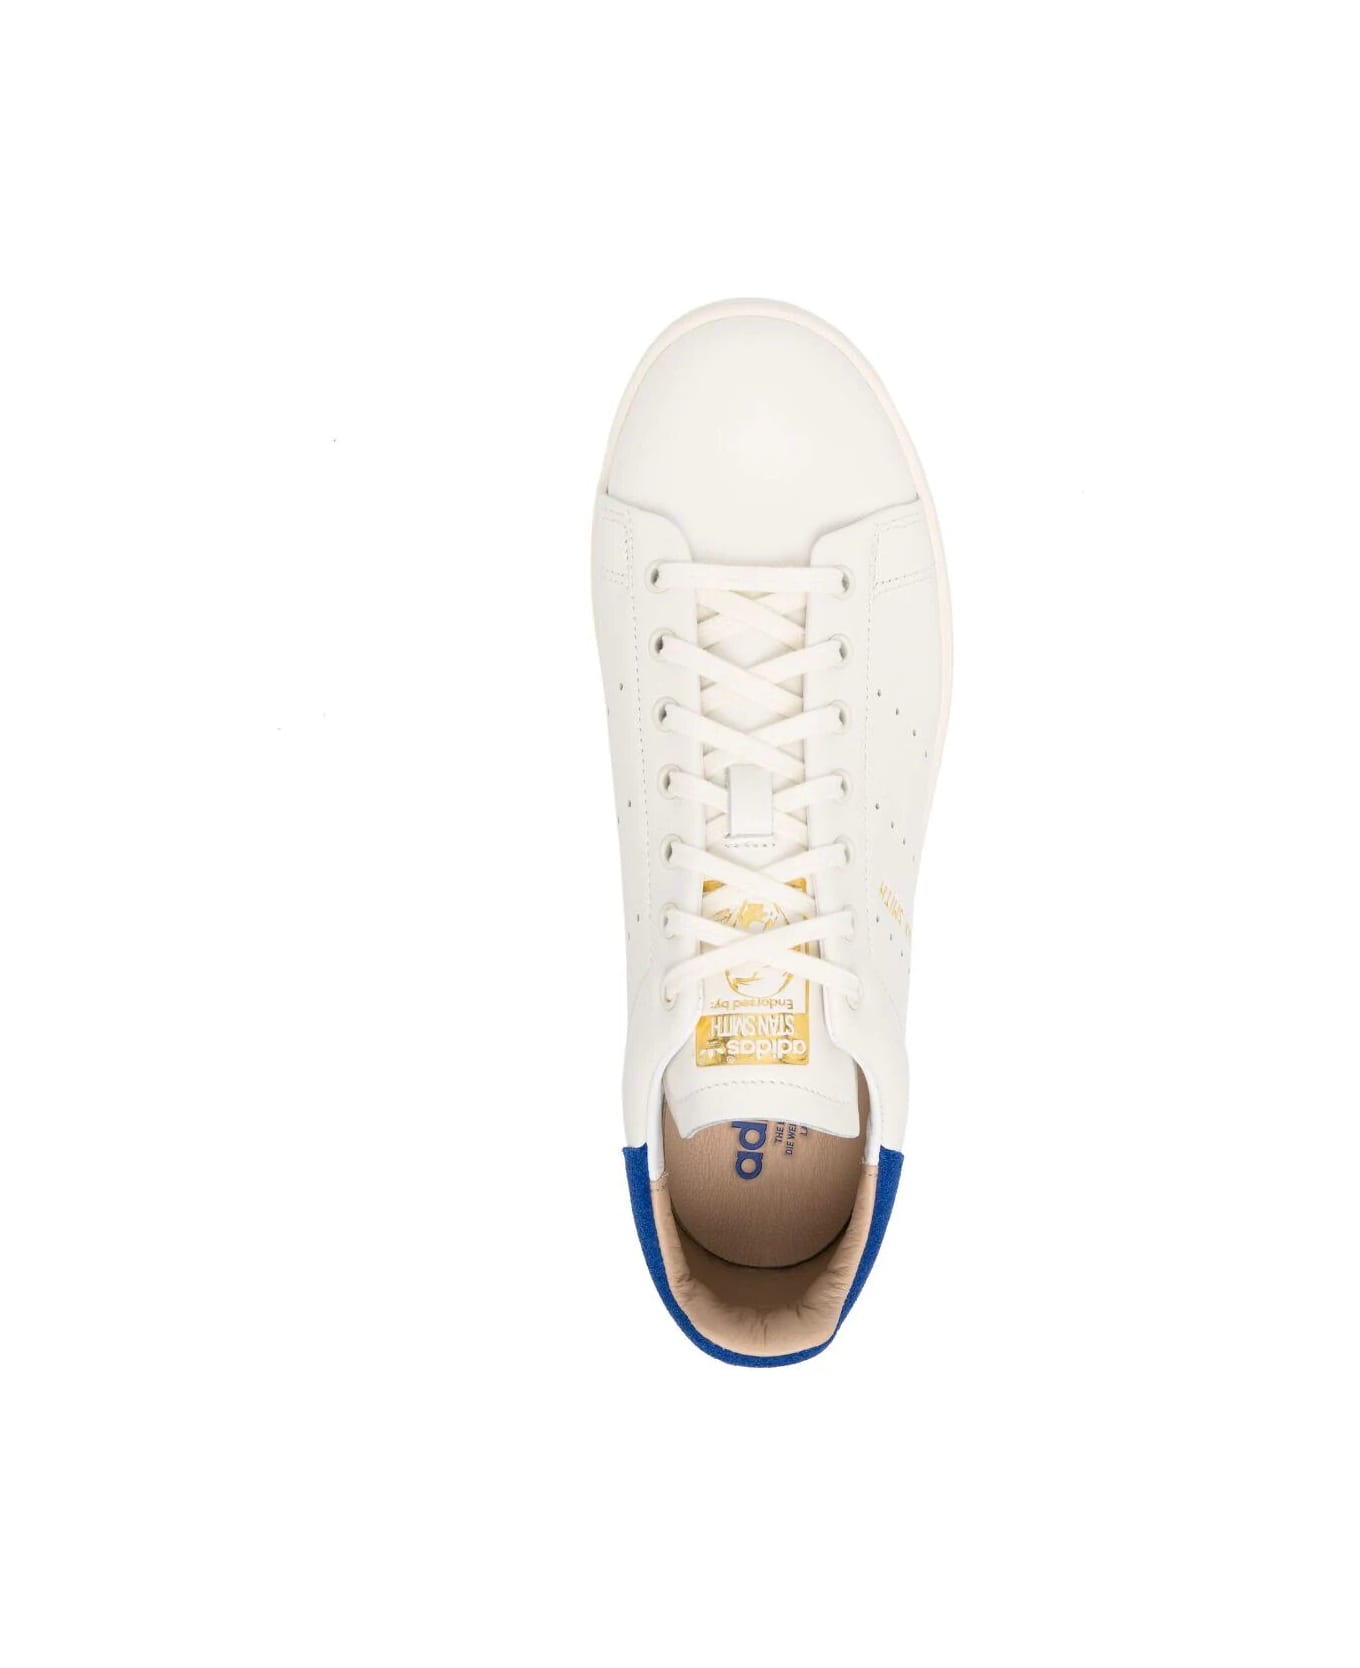 Adidas Originals Stan Smith Lux Sneakers - Owhite Cwhite Royblu スニーカー